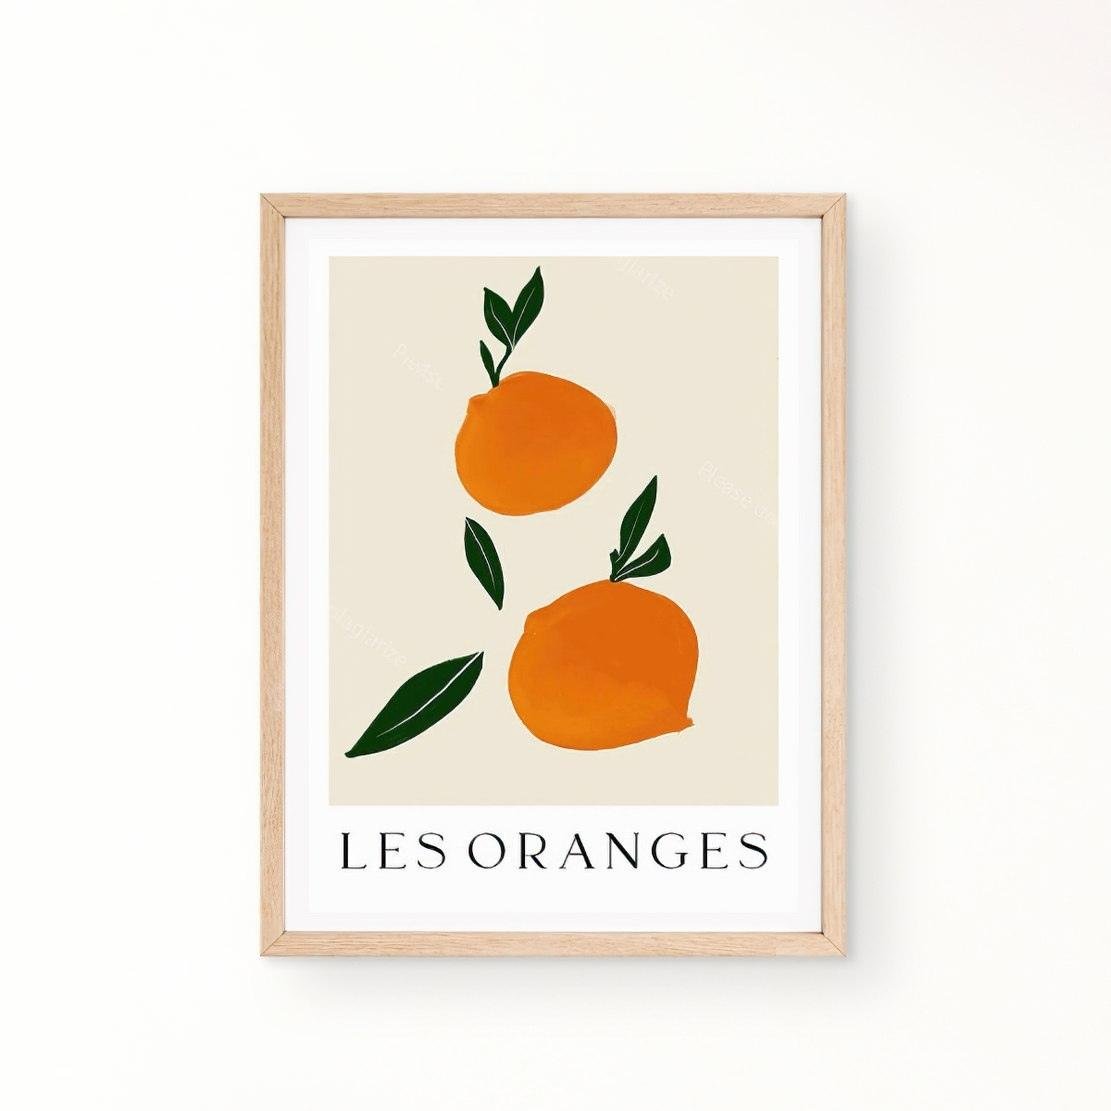 Les Oranges poster / Orange abstract art print 